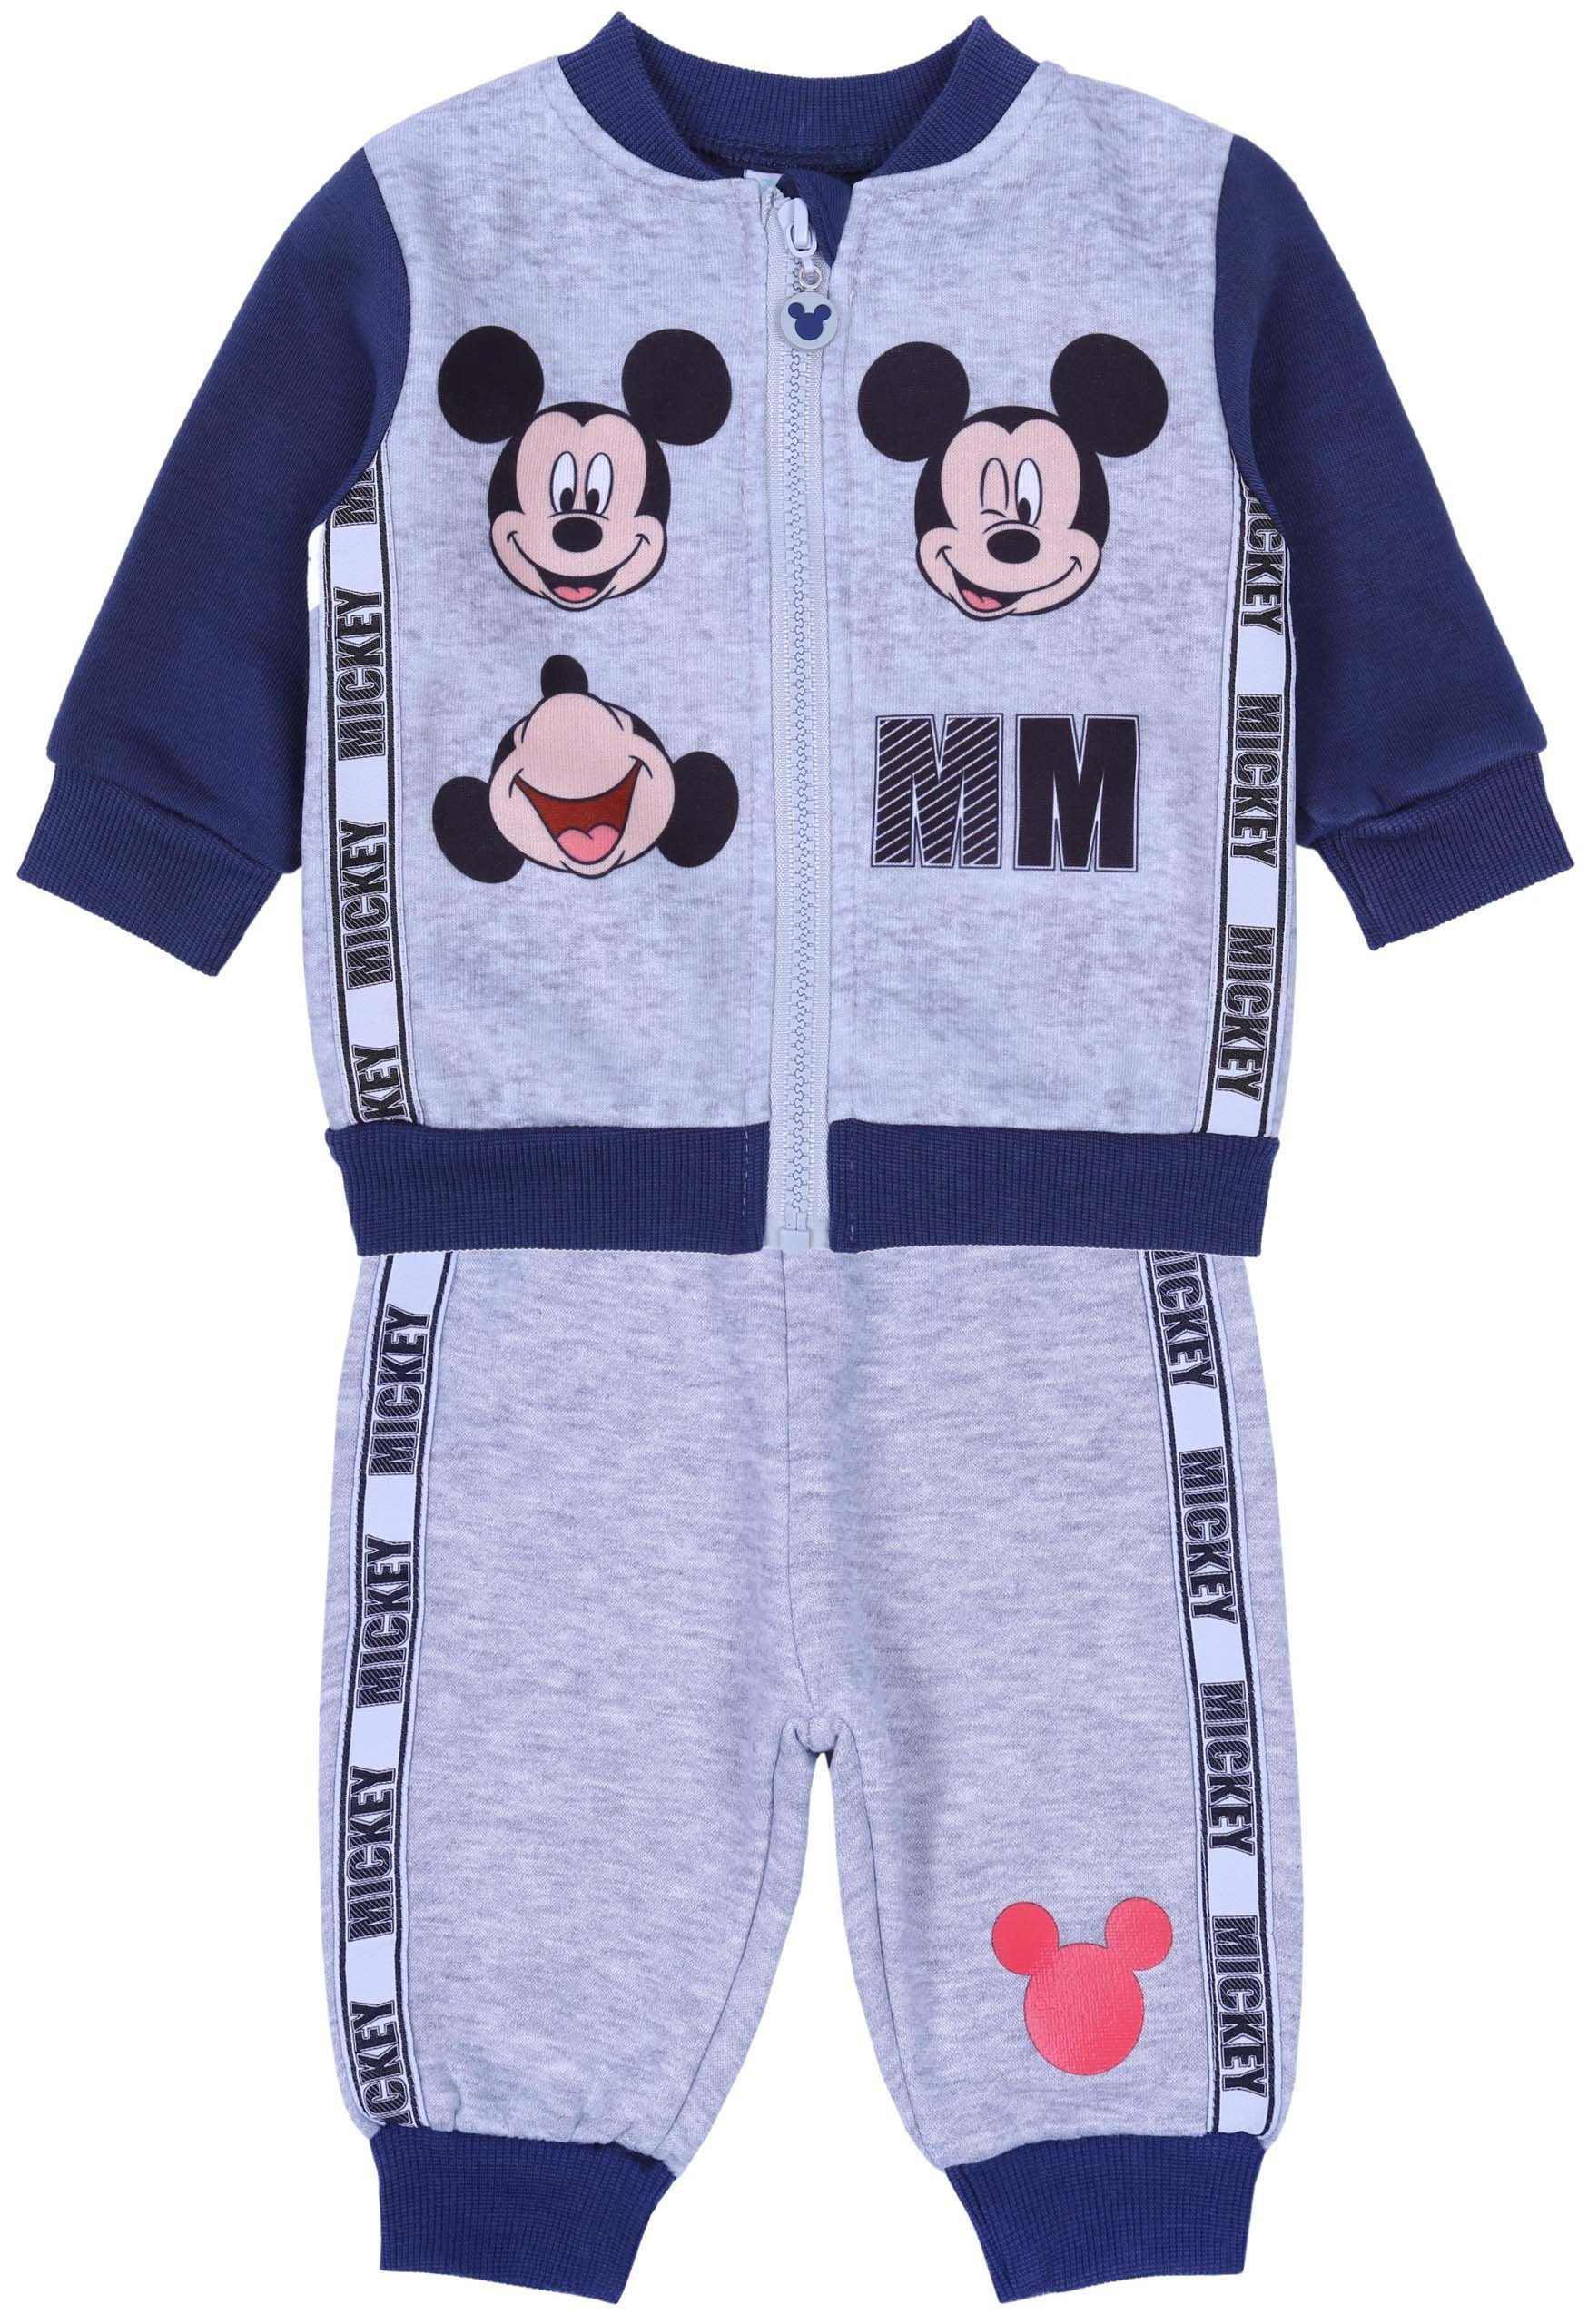 Sarcia.eu Trainingsanzug Baby Trainingsanzug grau und marineblau Mickey Disney 24 Monate